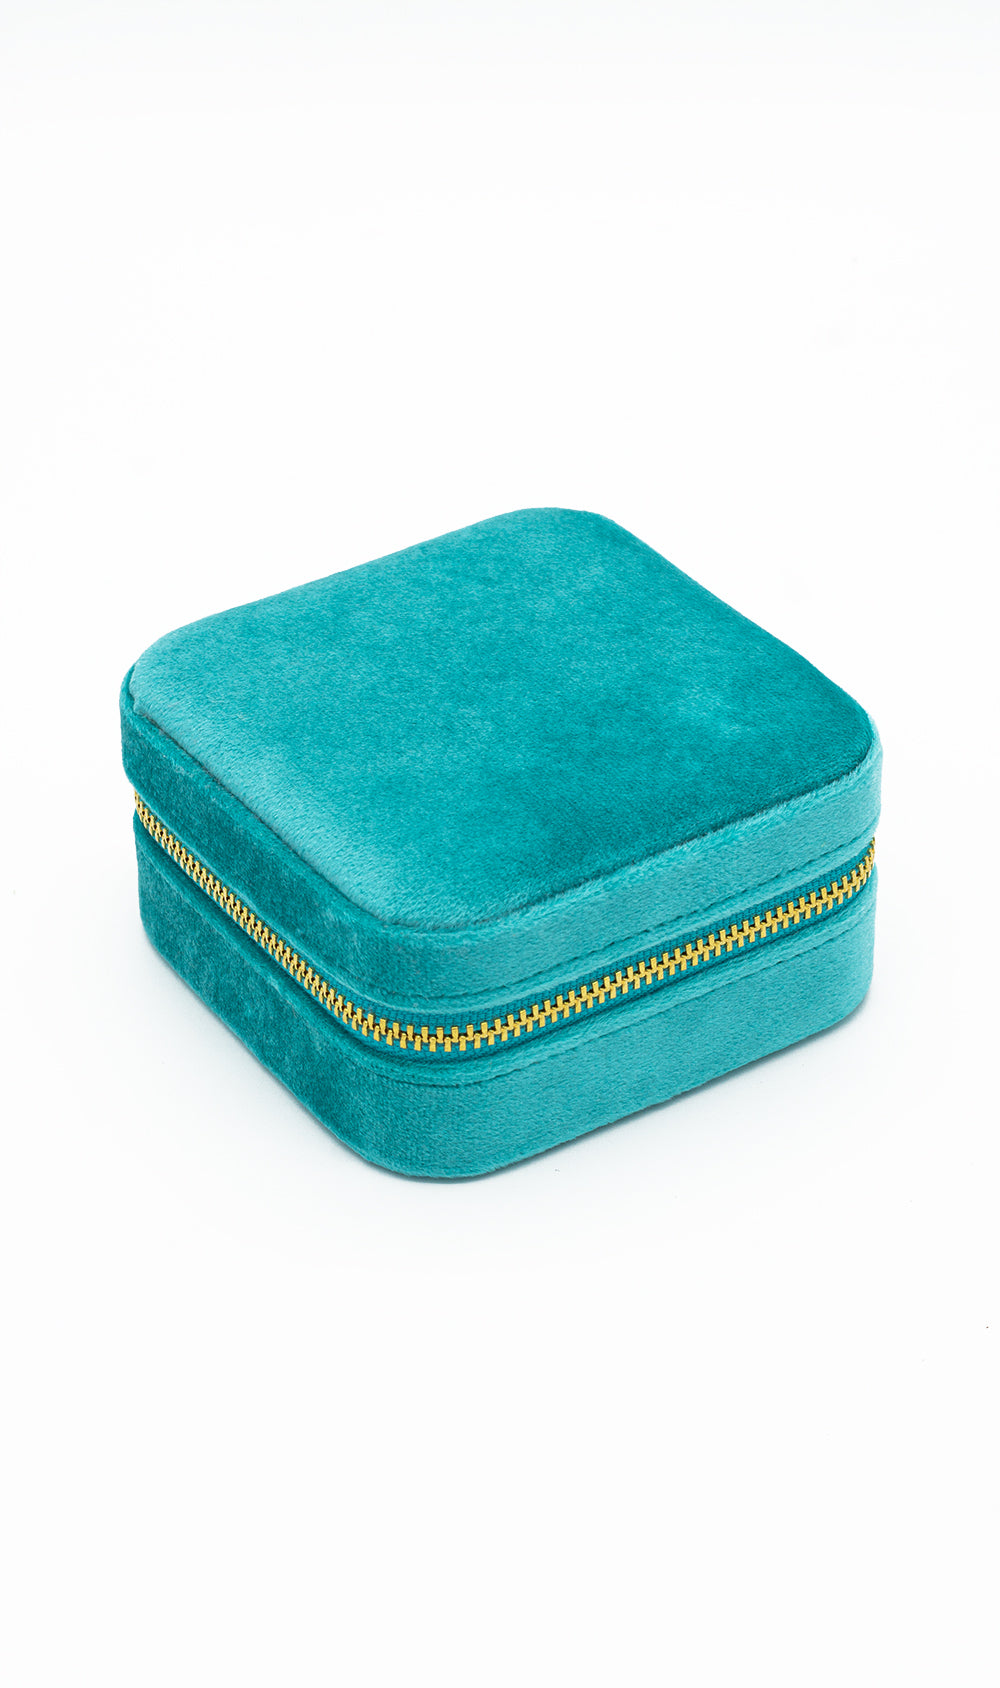 Jewelry Box - metallic turquoise - SimplyO